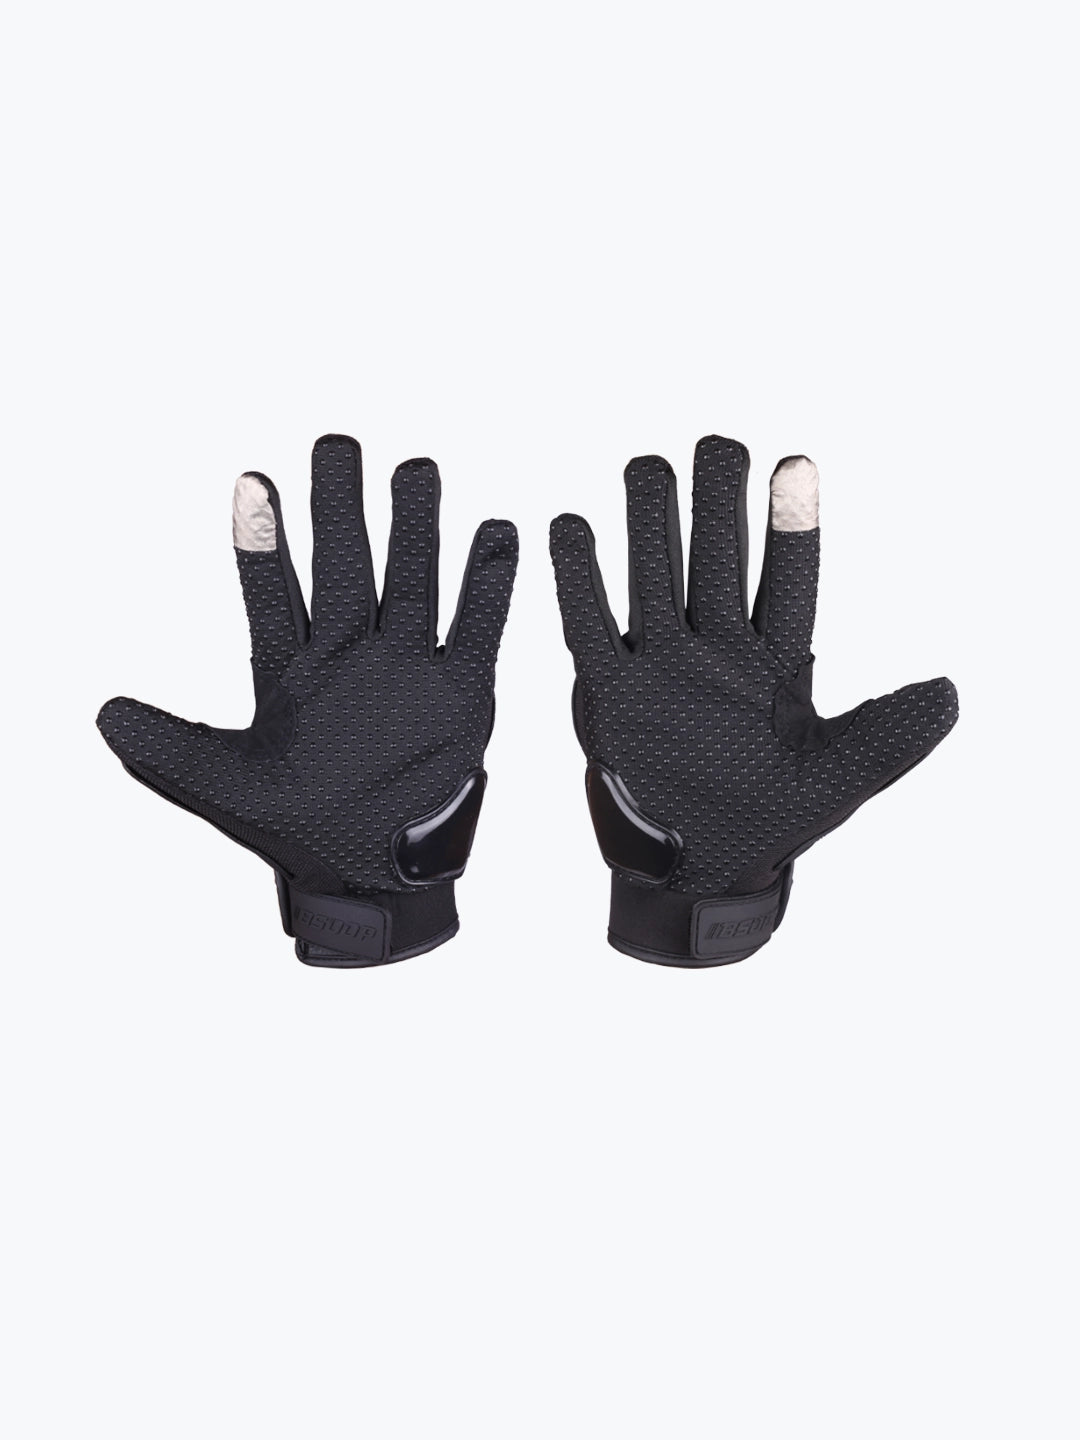 BSDDP Gloves A0107 Black